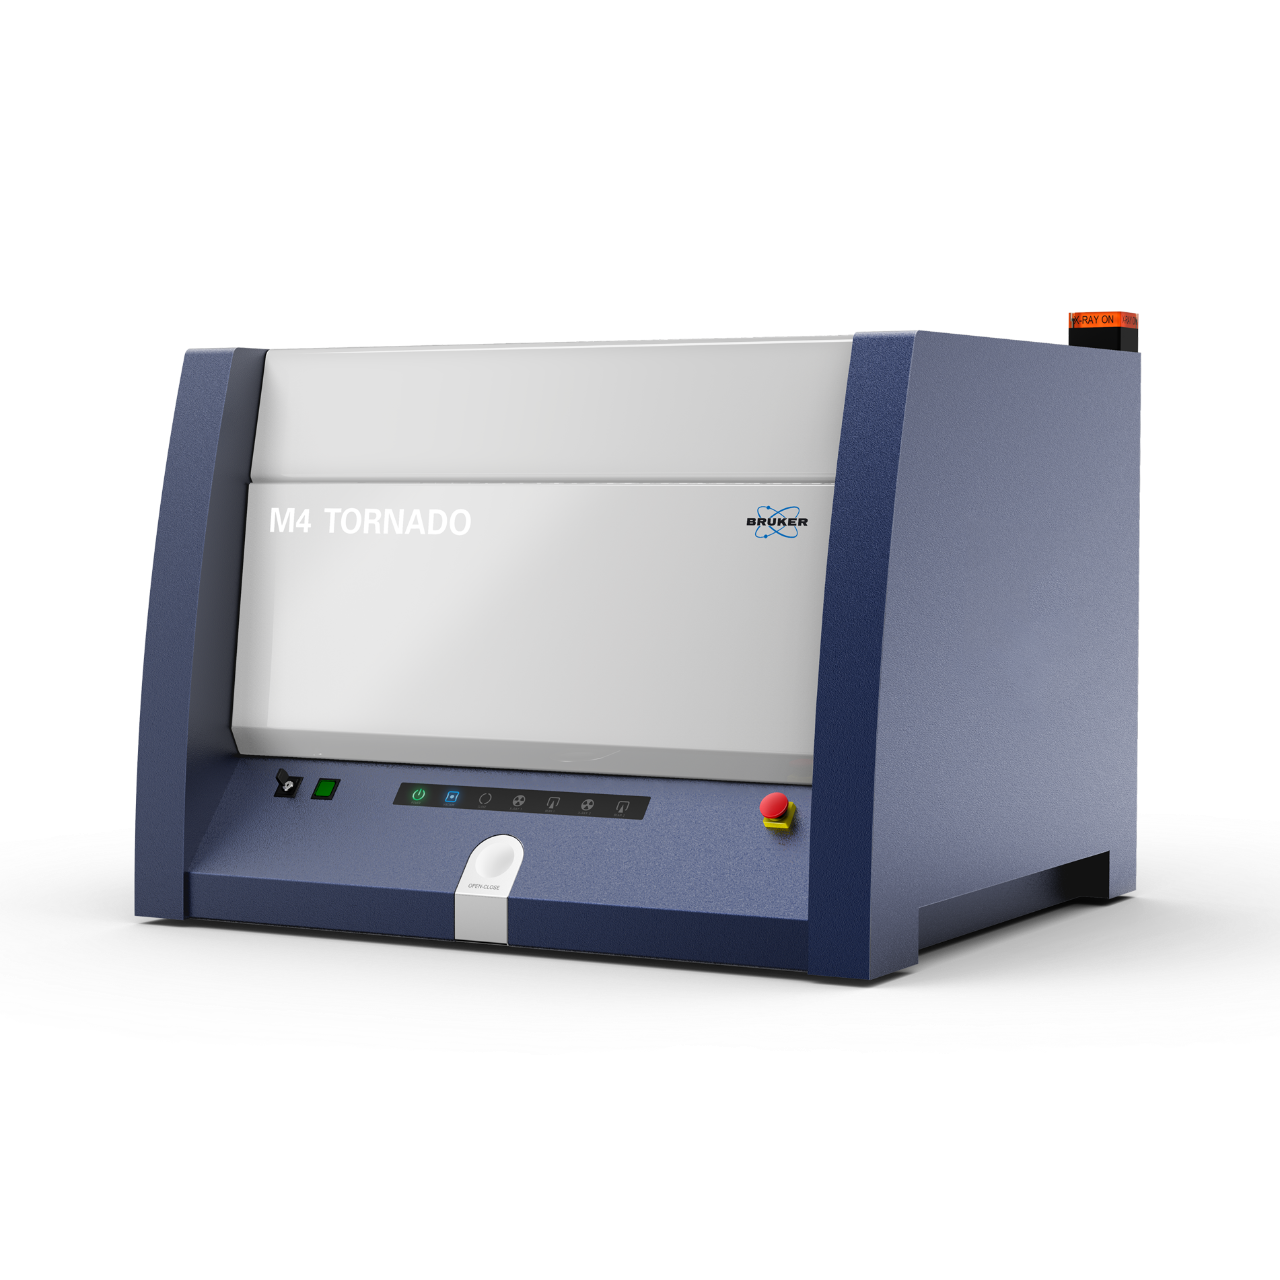 M4 TORNADO micro-XRF spectrometer